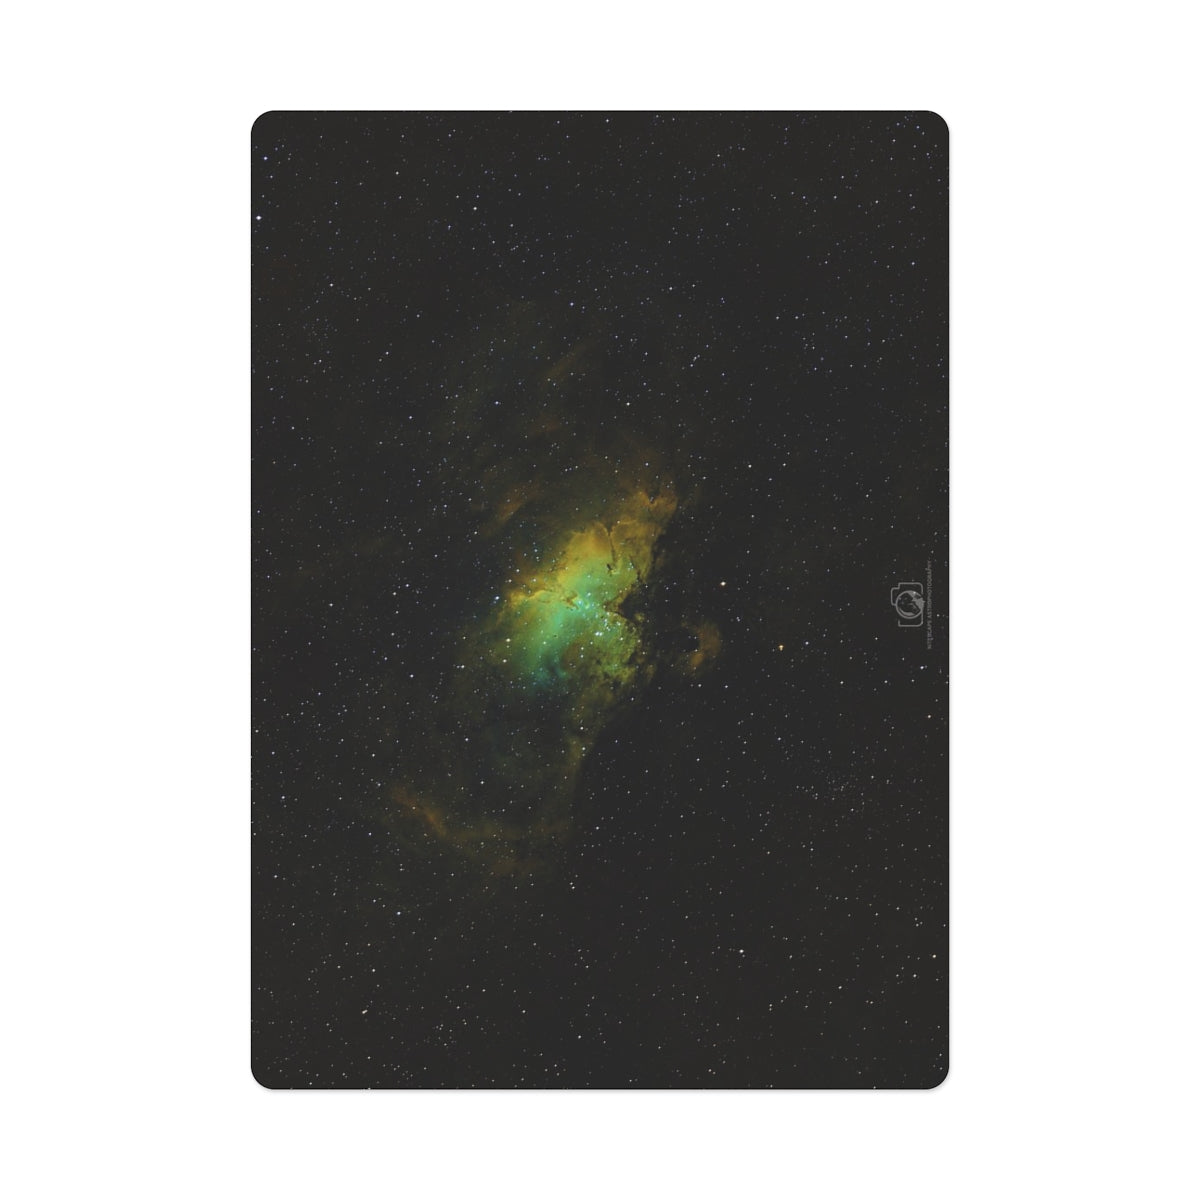 Poker Cards: Eagle Nebula w/ Pillars of Creation